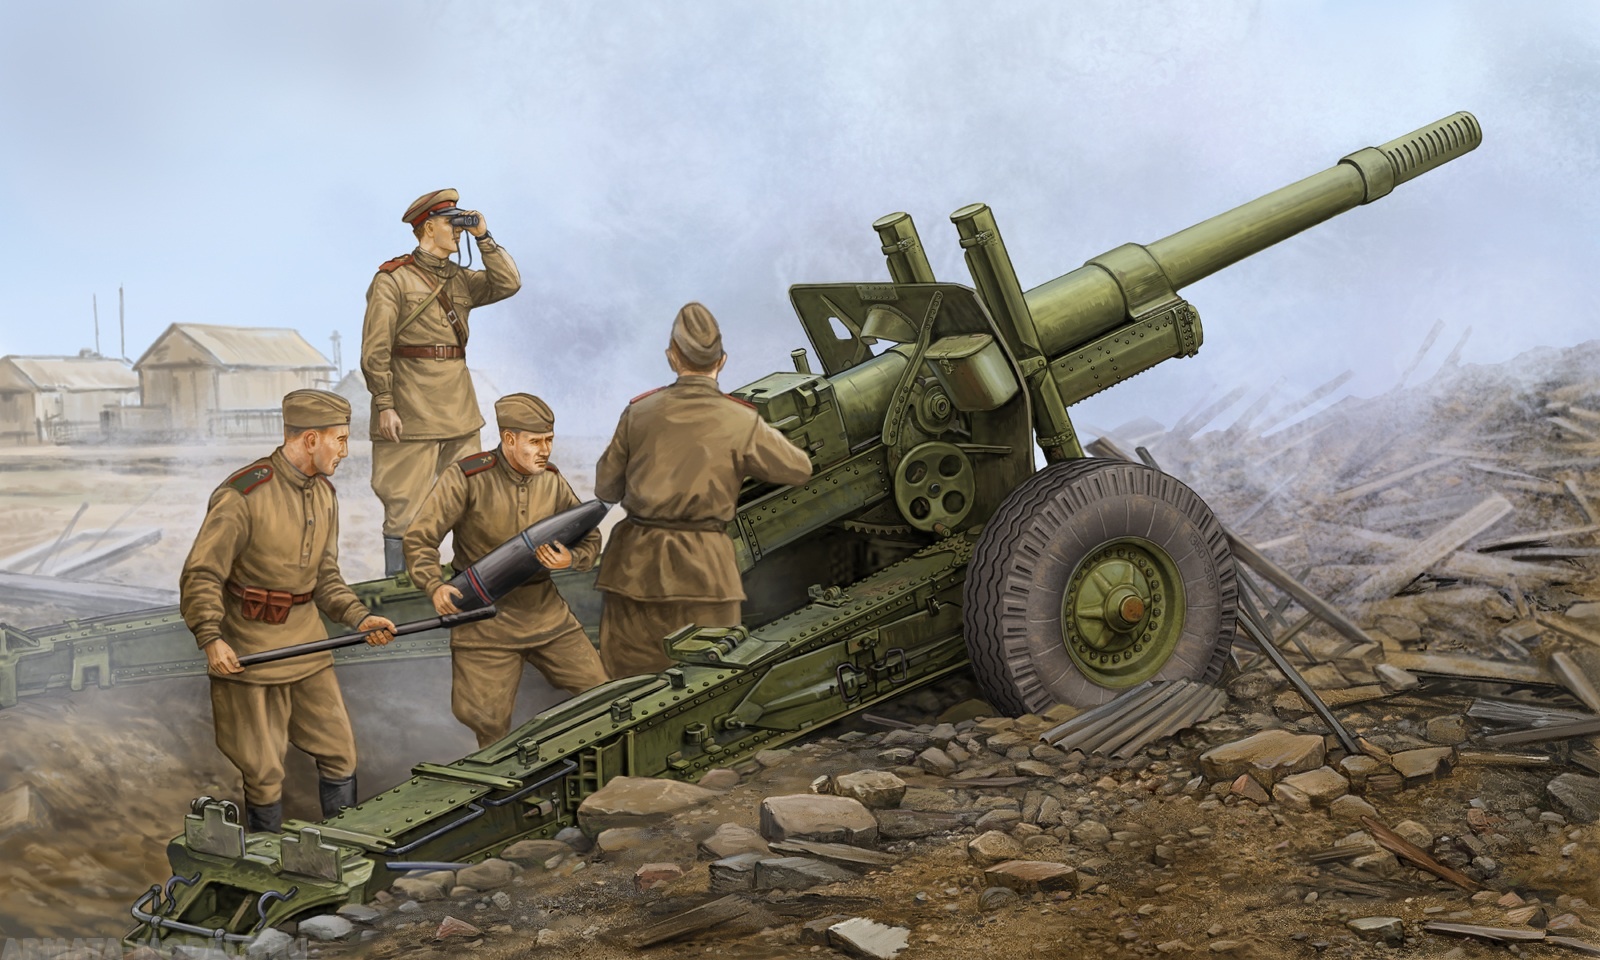 Сау пион 2с7 — 203-мм самоходная артиллерийская установка